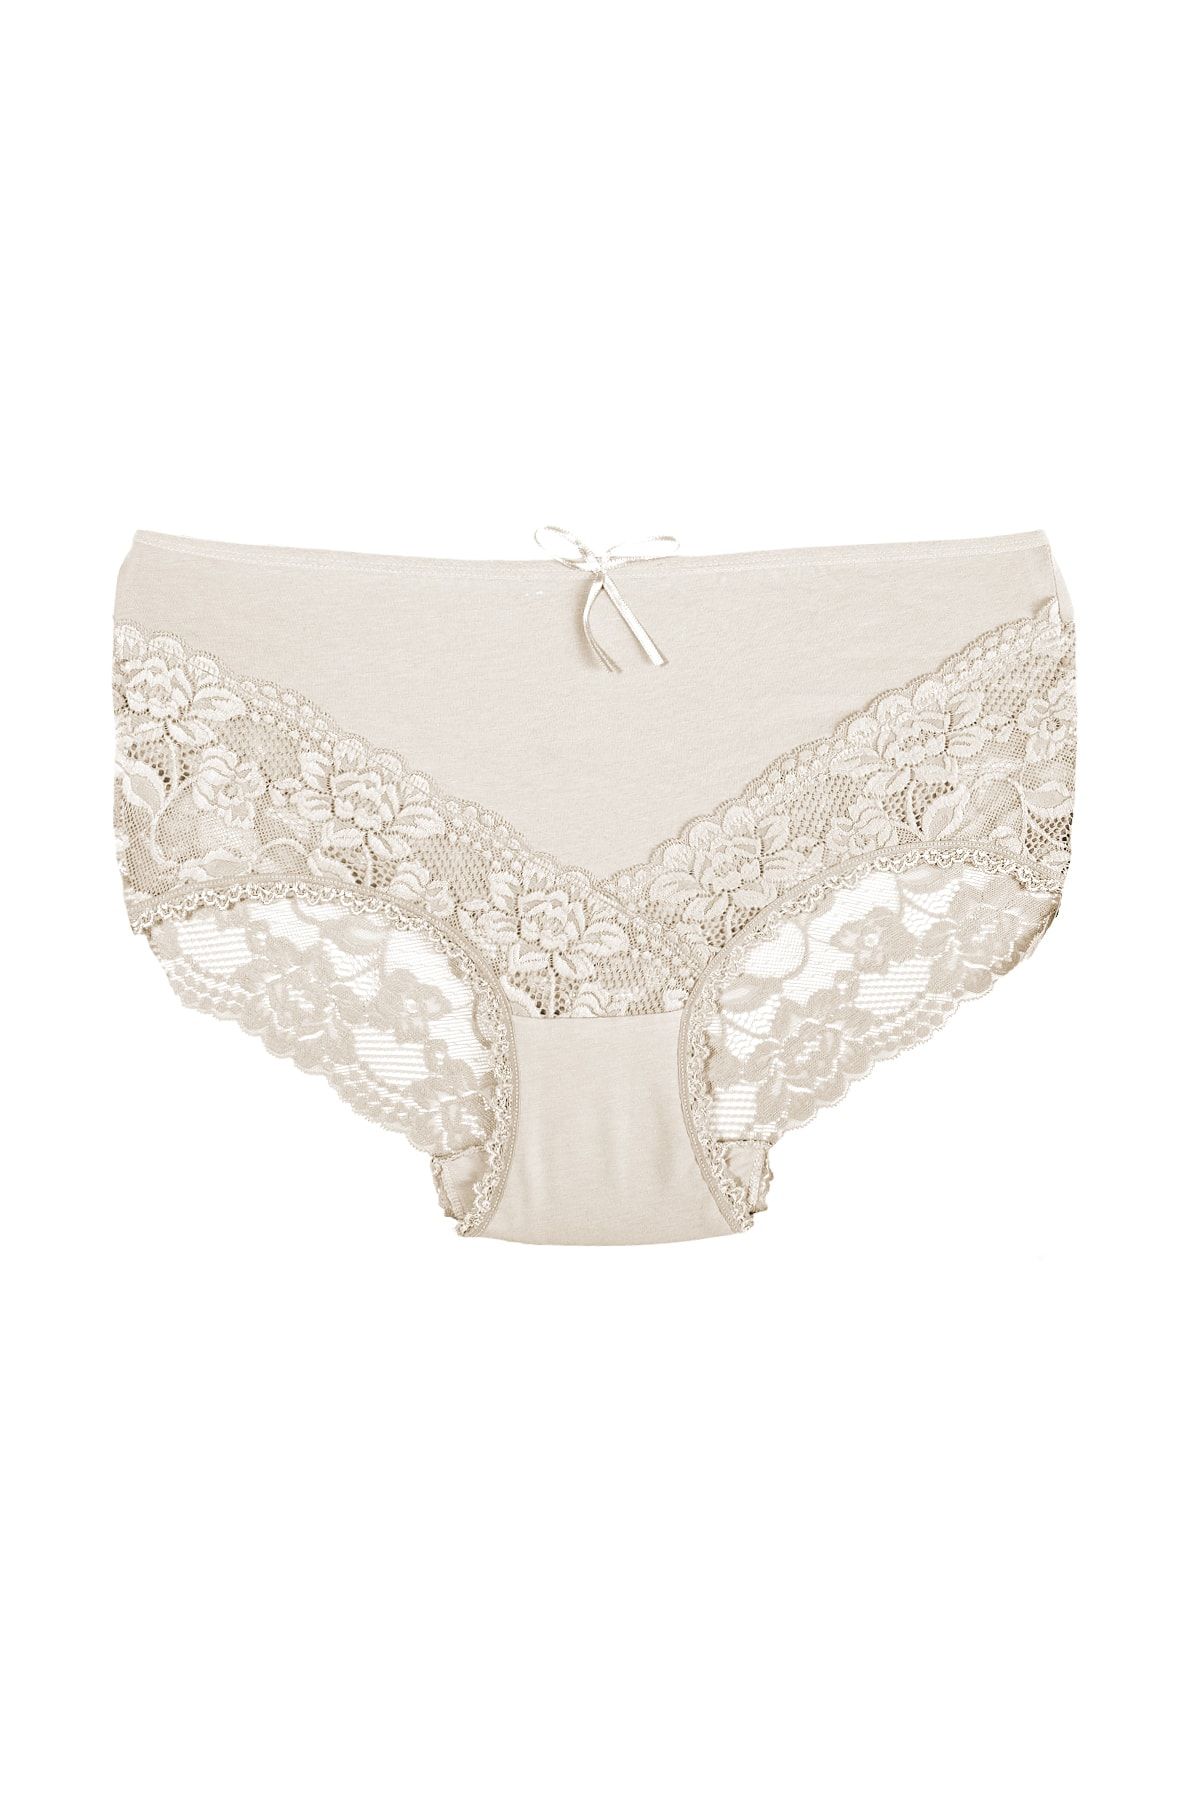 Zena Ecru High Waist Lace Cotton Plus Size Women's Panties - Trendyol